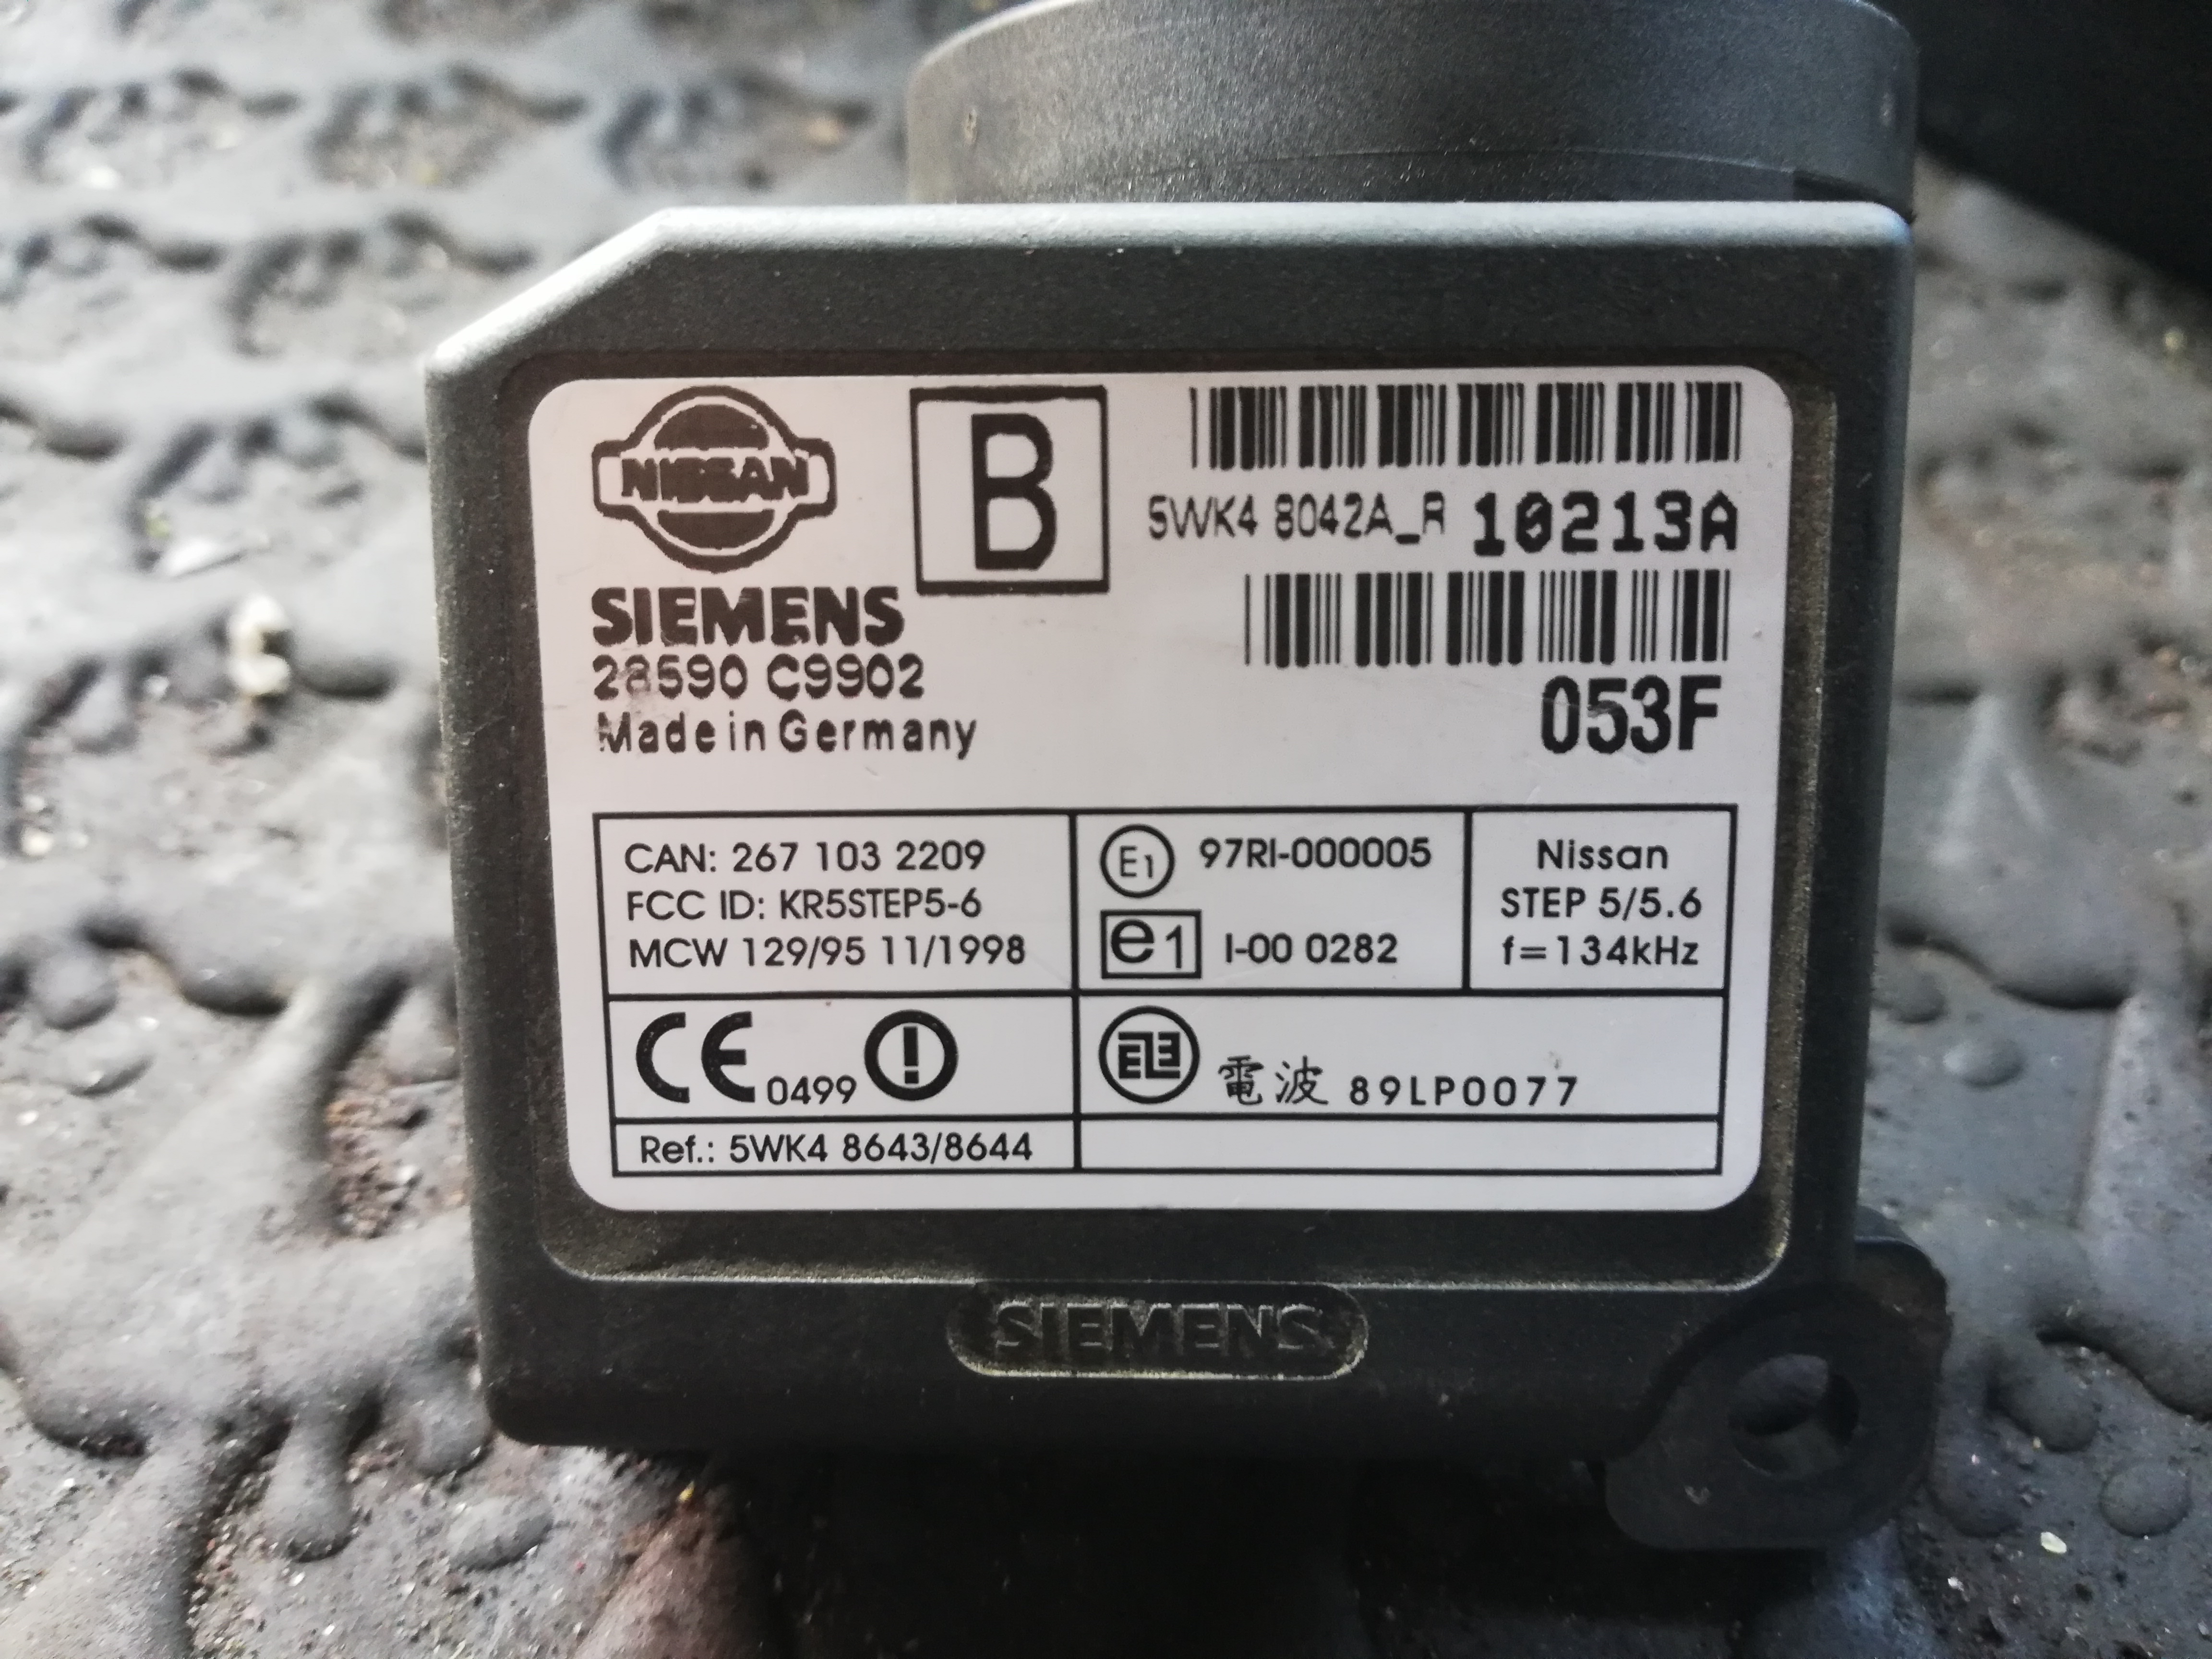 Nissan Almera N16 - Rozkodowany System Nats - Elektroda.pl